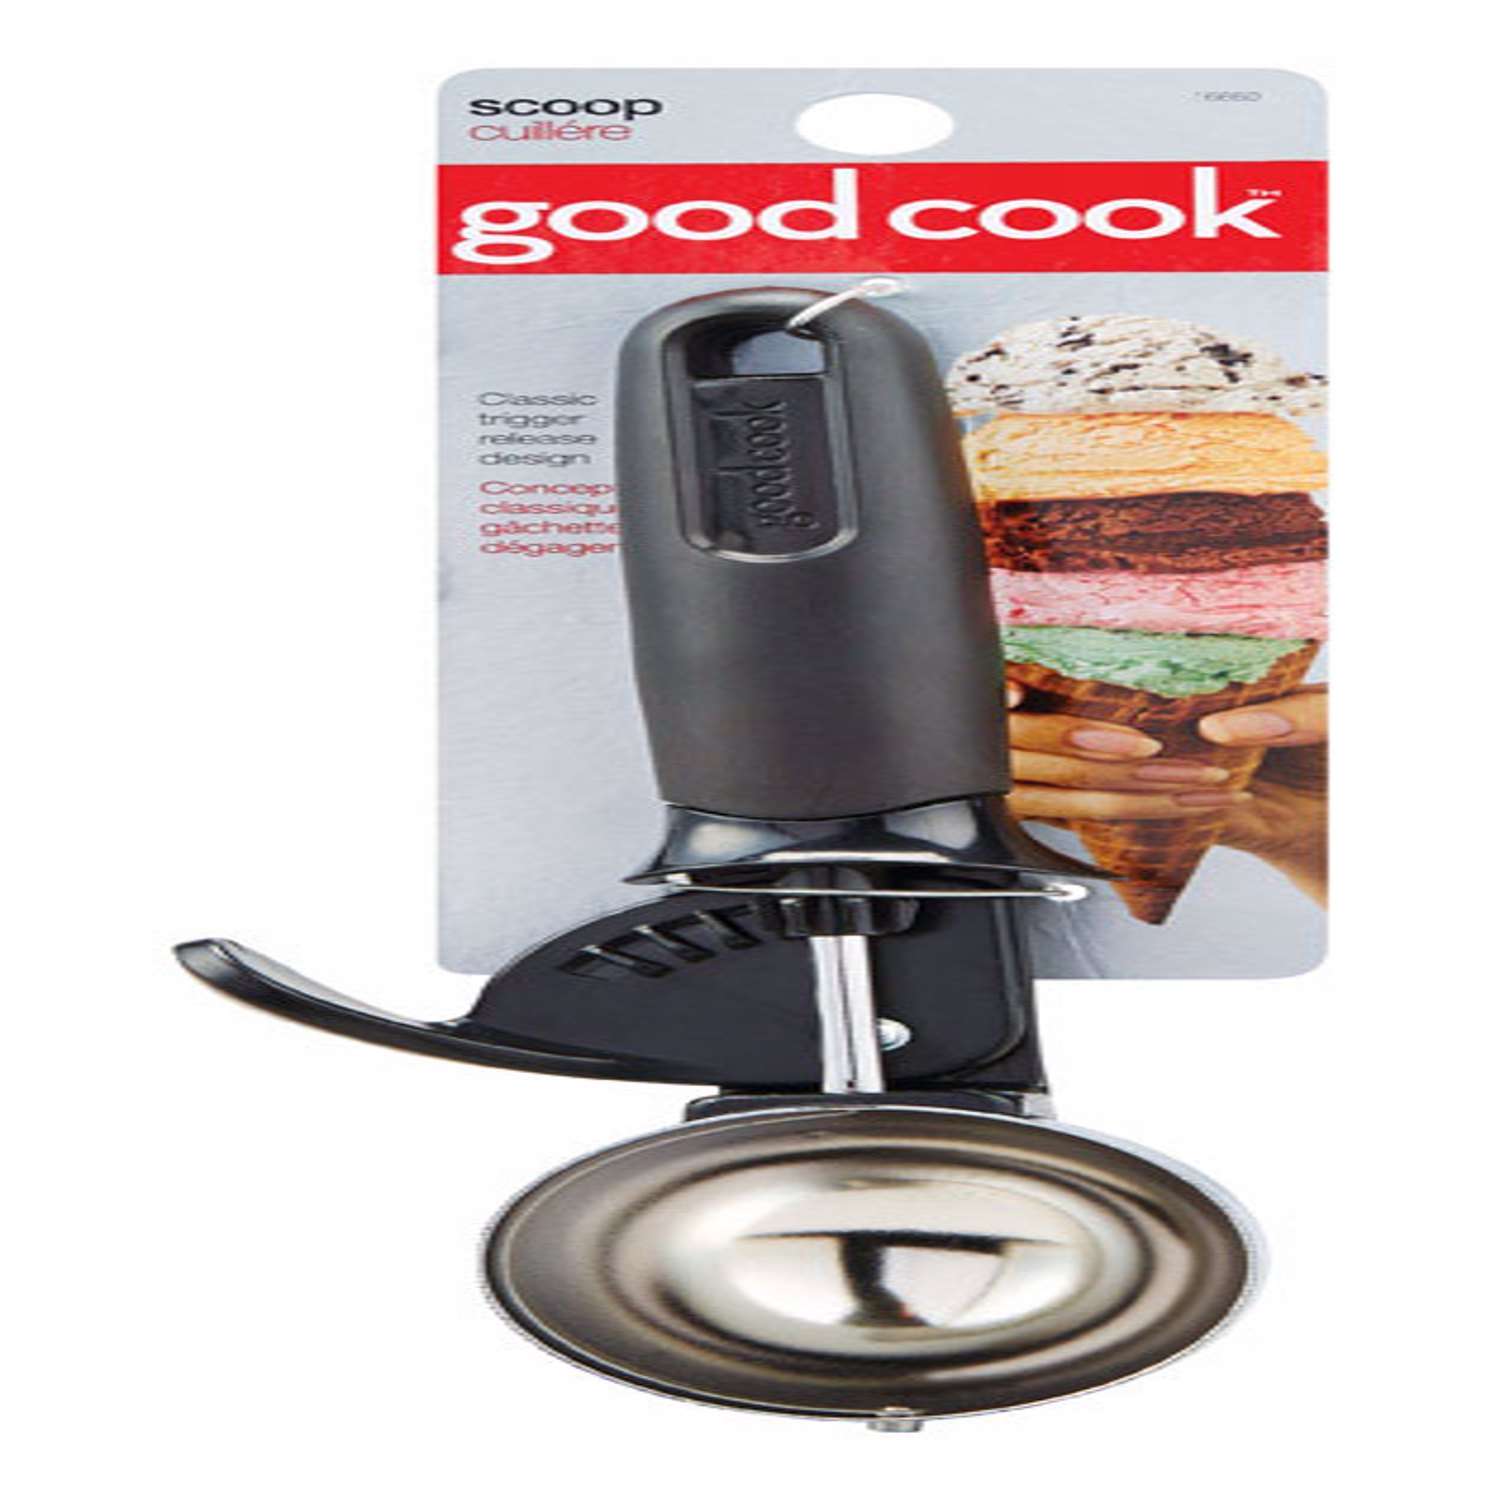 GoodCook® Pro Trigger Ice Cream Scoop - Gray/Red, 10.75 in - Kroger